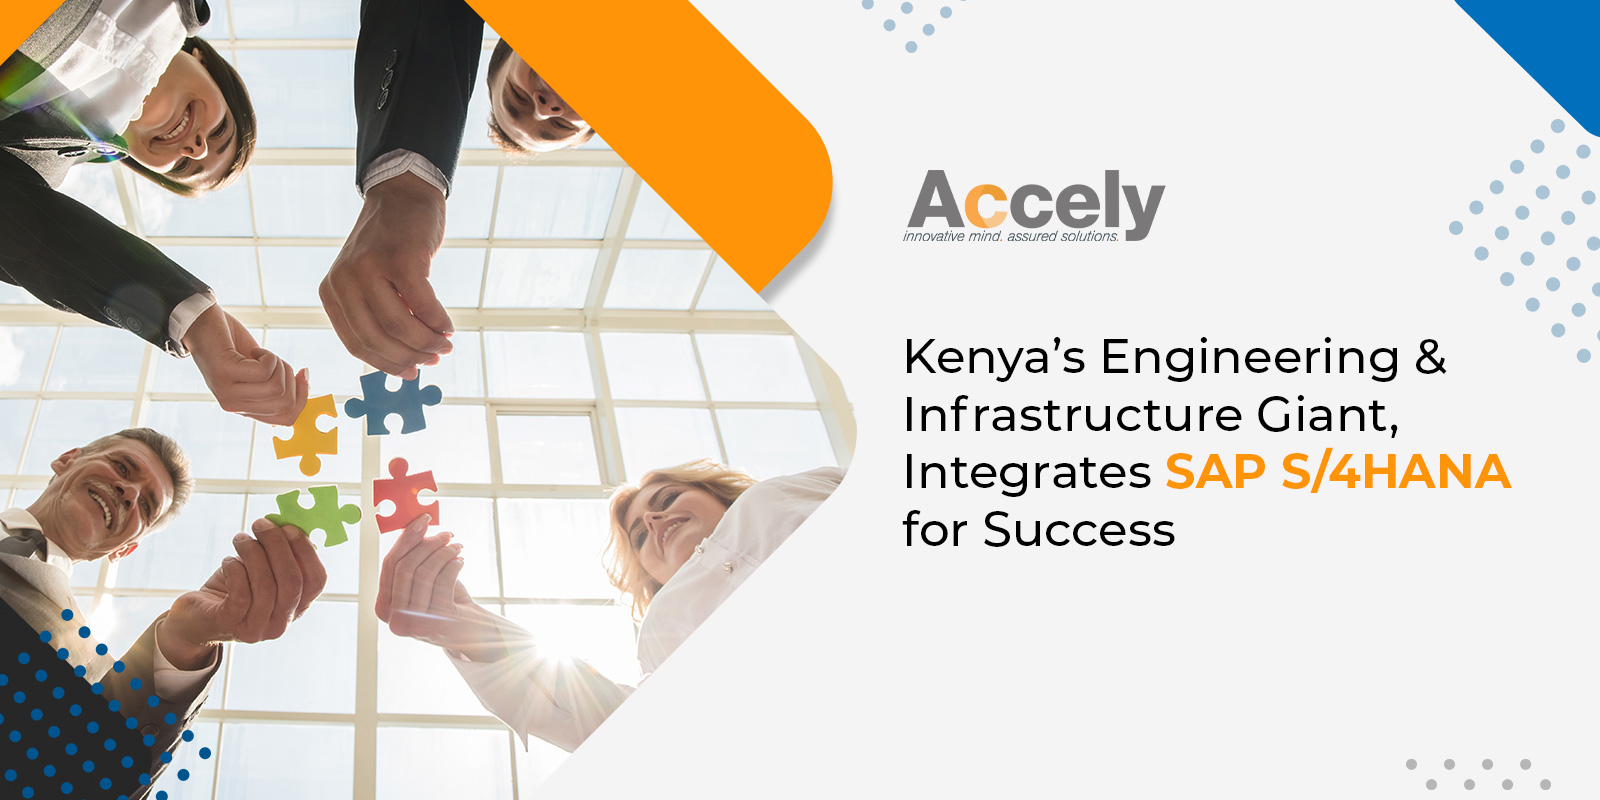 Kenya’s Engineering & Infrastructure Giant, Integrates SAP S/4HANA for Success